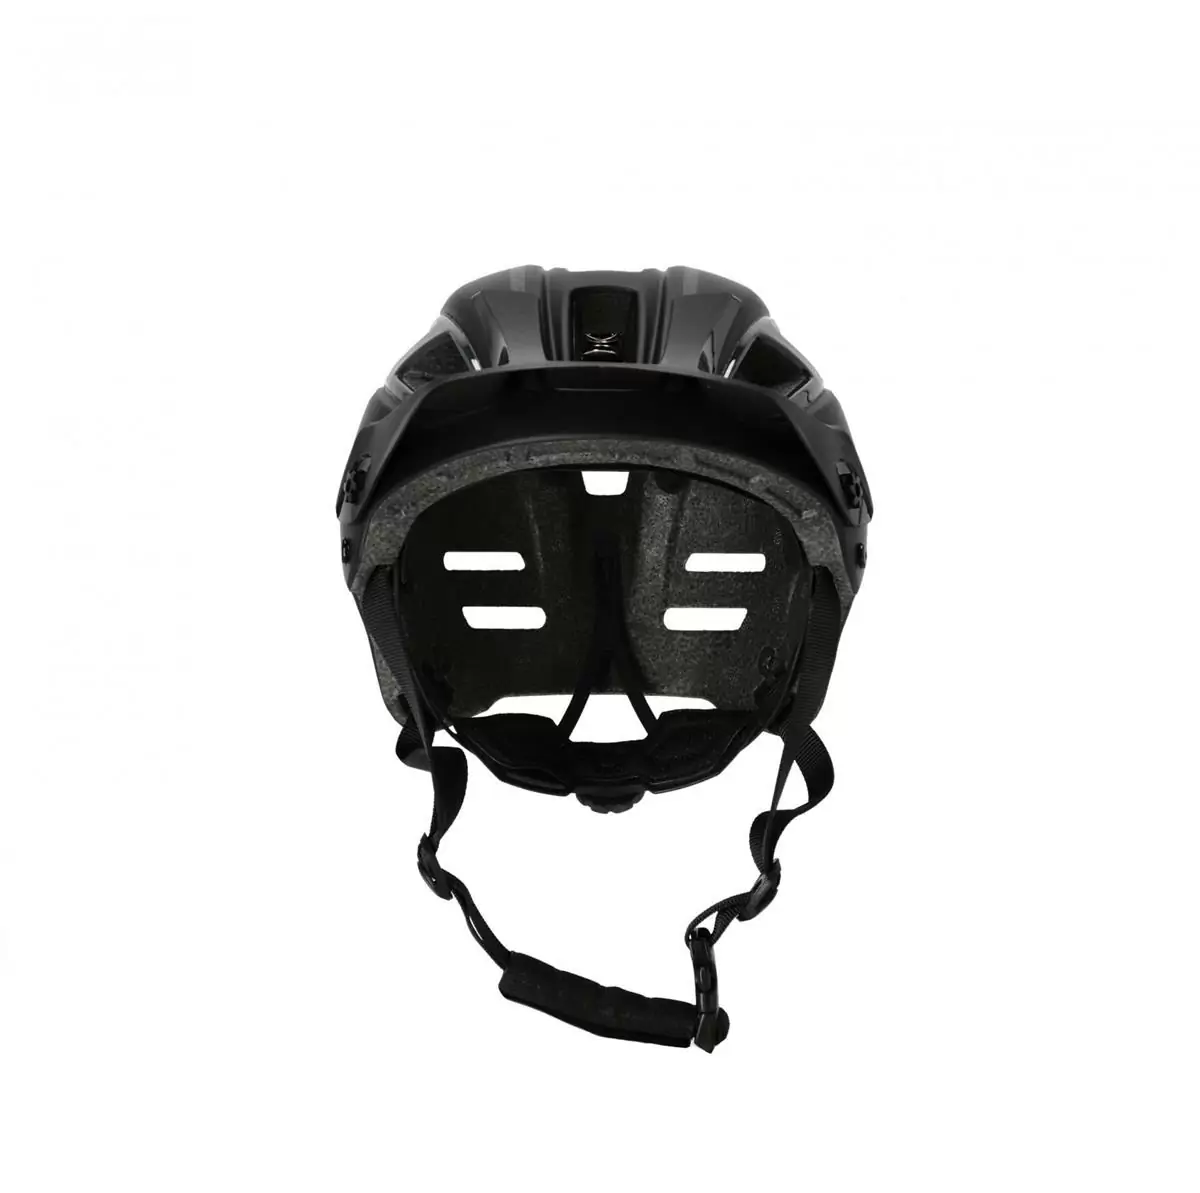 Helmet DoubleP black size S/M (53-58) #1